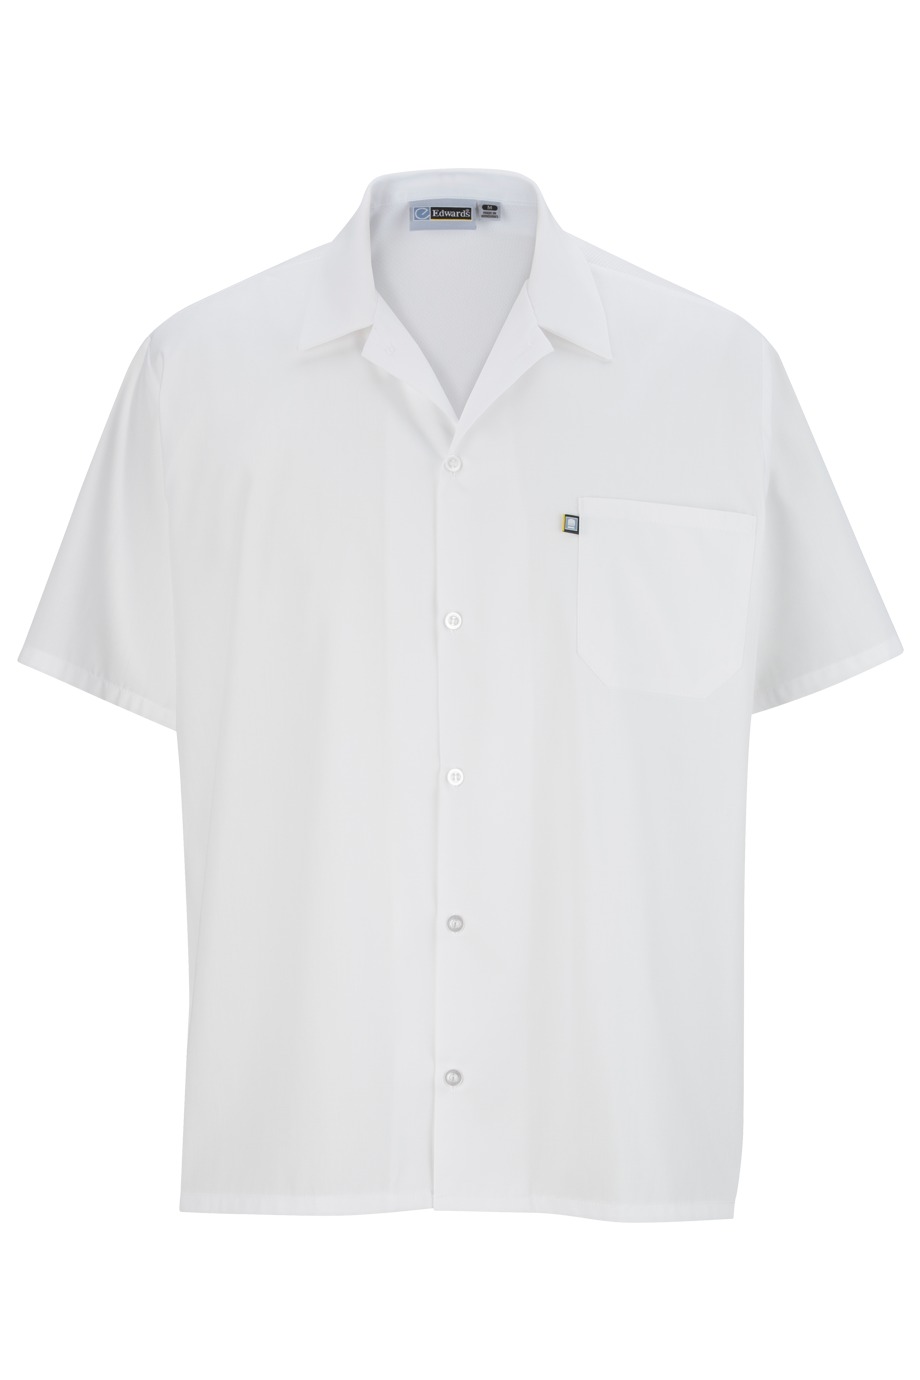 Edwards Garment 1305 - Cook Shirt W/Mesh Back